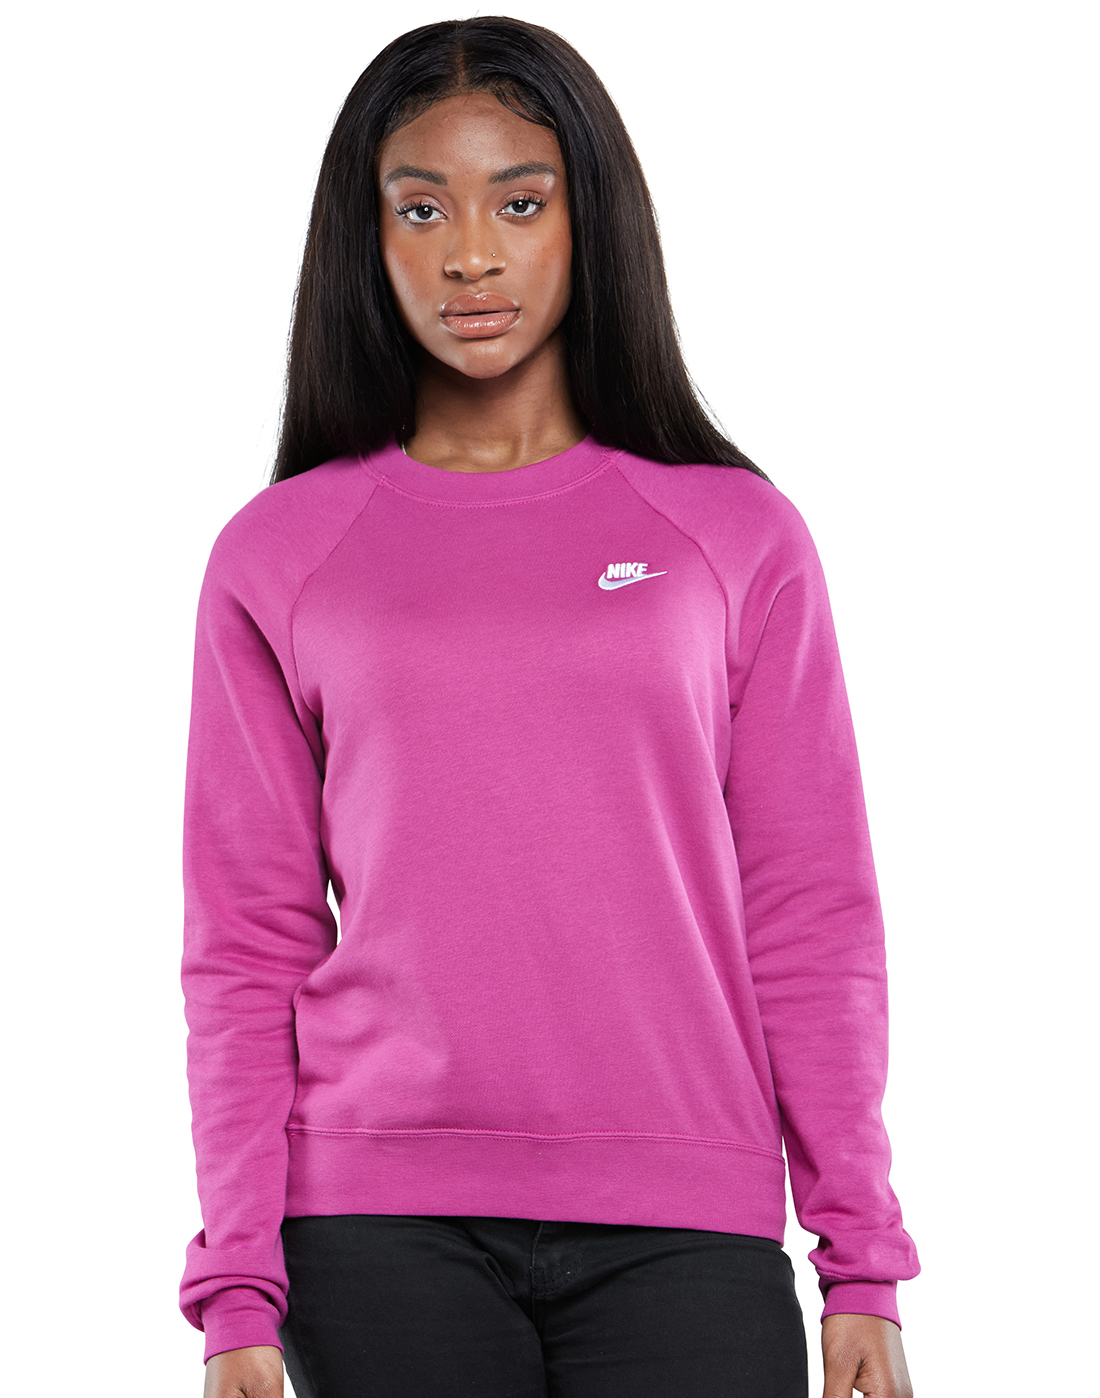 Nike Womens Essential Crewneck Fleece Sweatshirt - Pink | Life Style ...